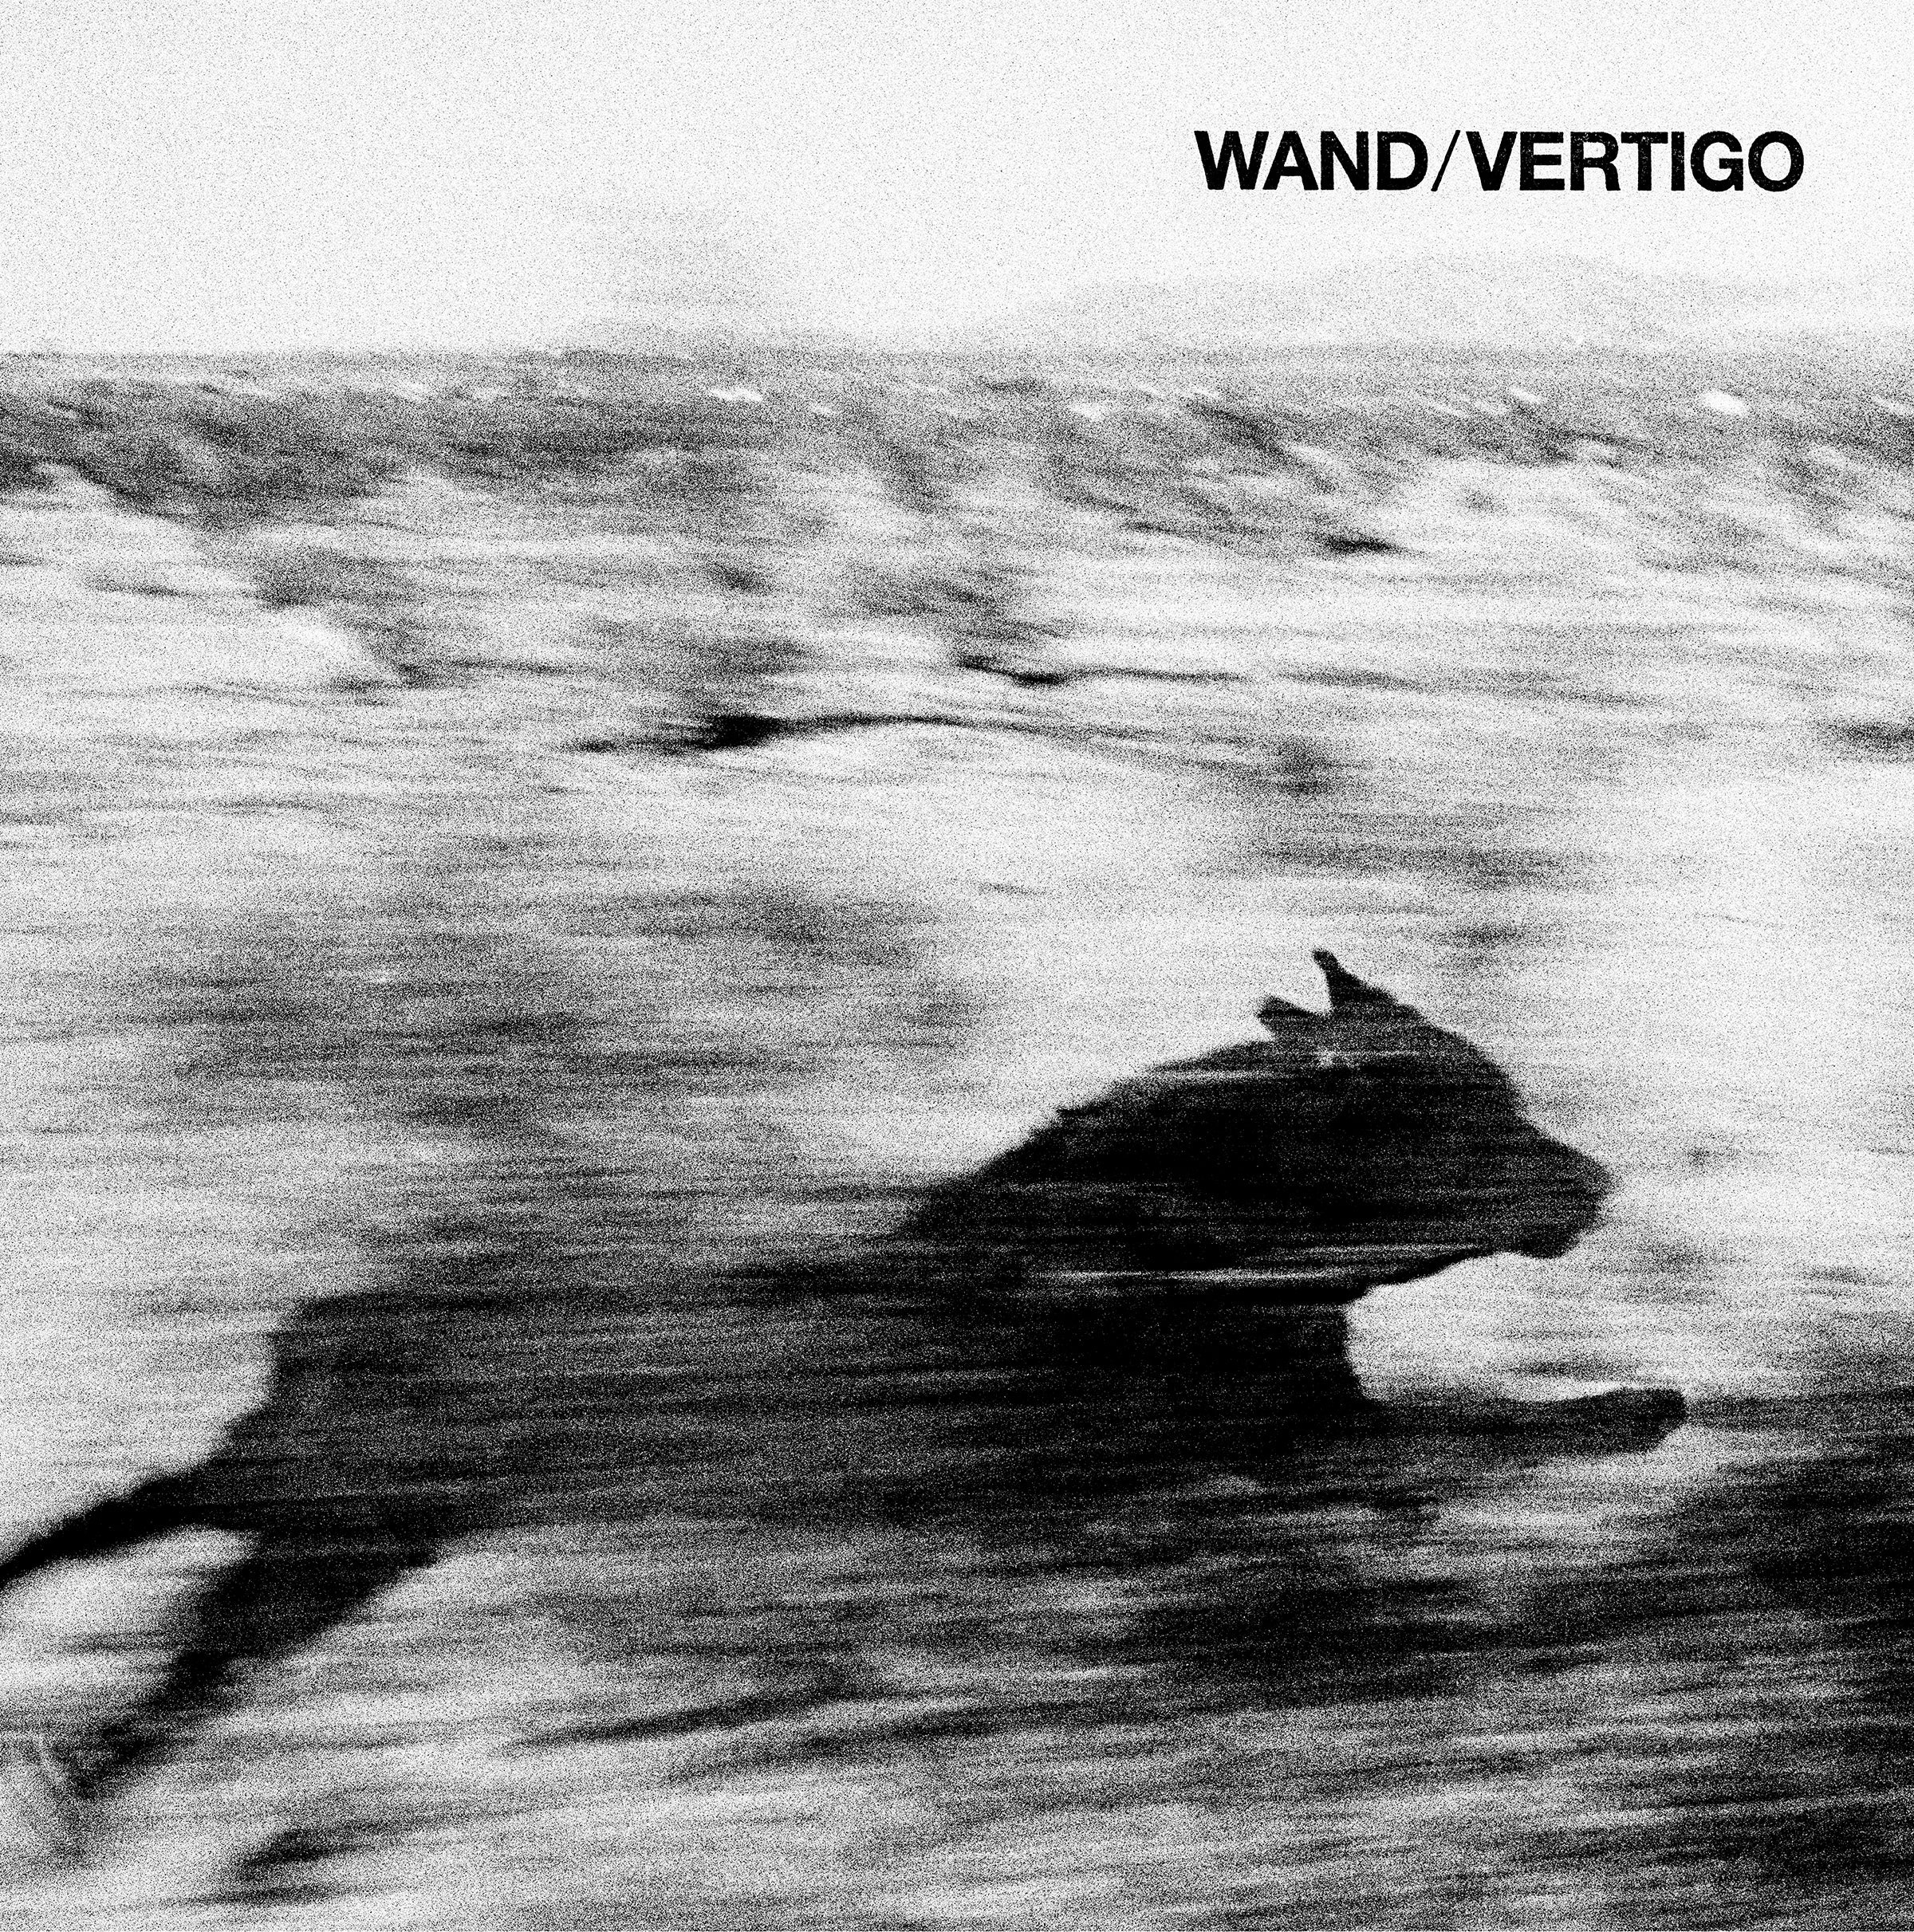 Wand - Vertigo: Vinyl LP